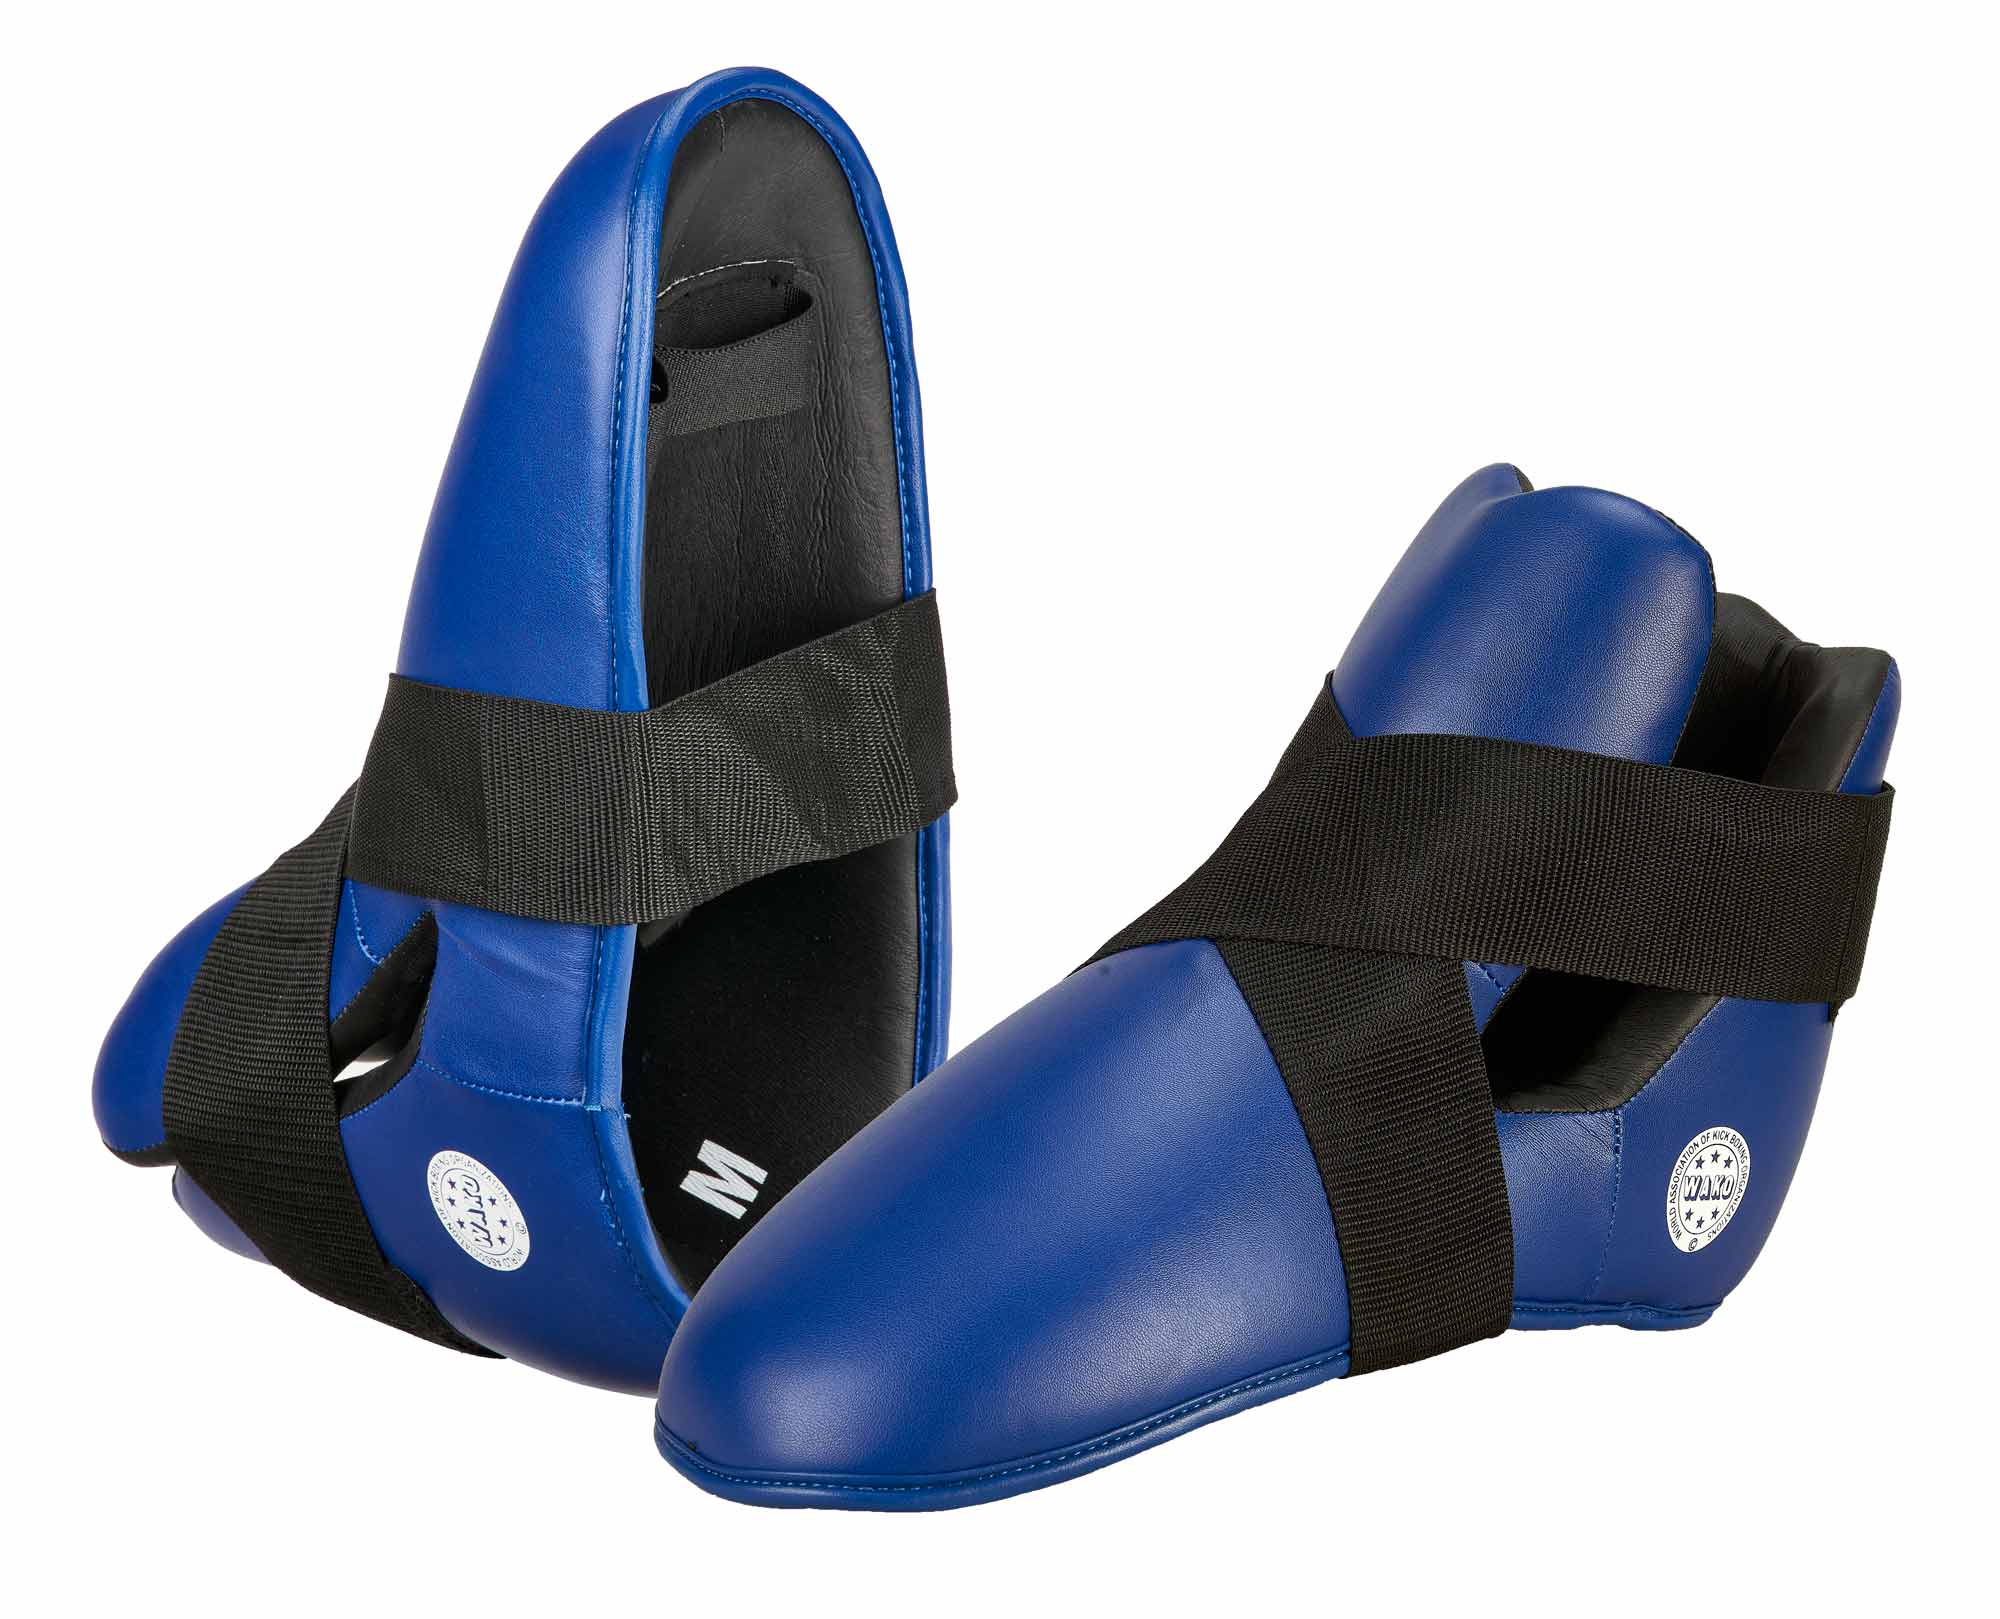 adidas Super Safety Kicks - blue, WAKO, ADIWAKOB01